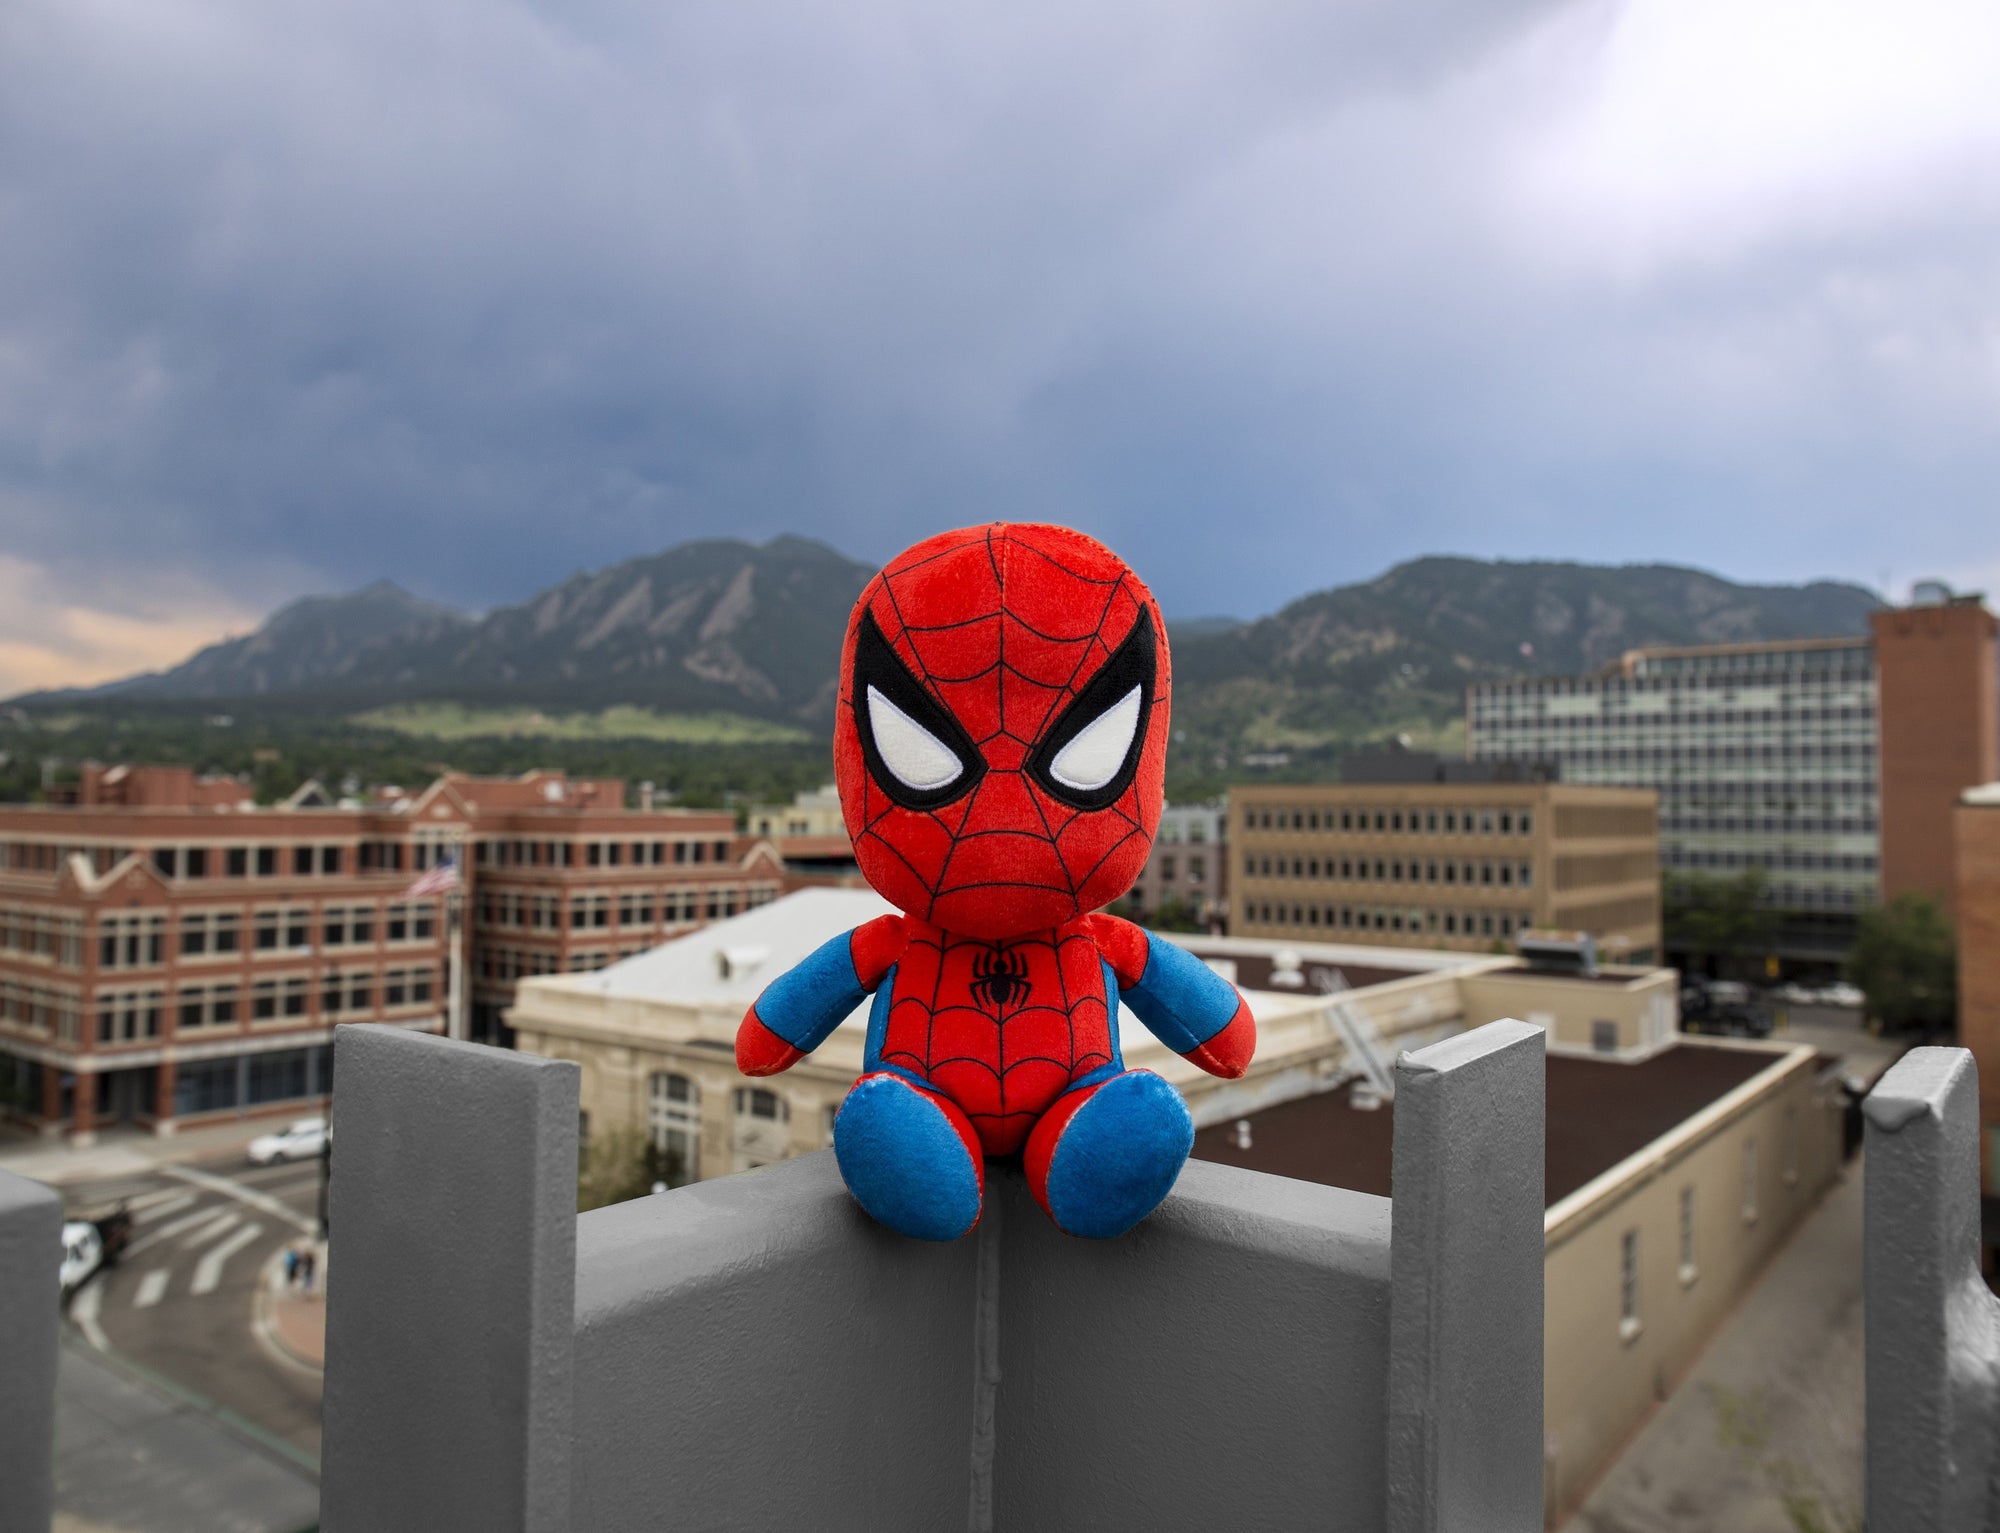 Marvel Spider-Man Phunny Plush by Kidrobot - Kidrobot - Designer Art Toys